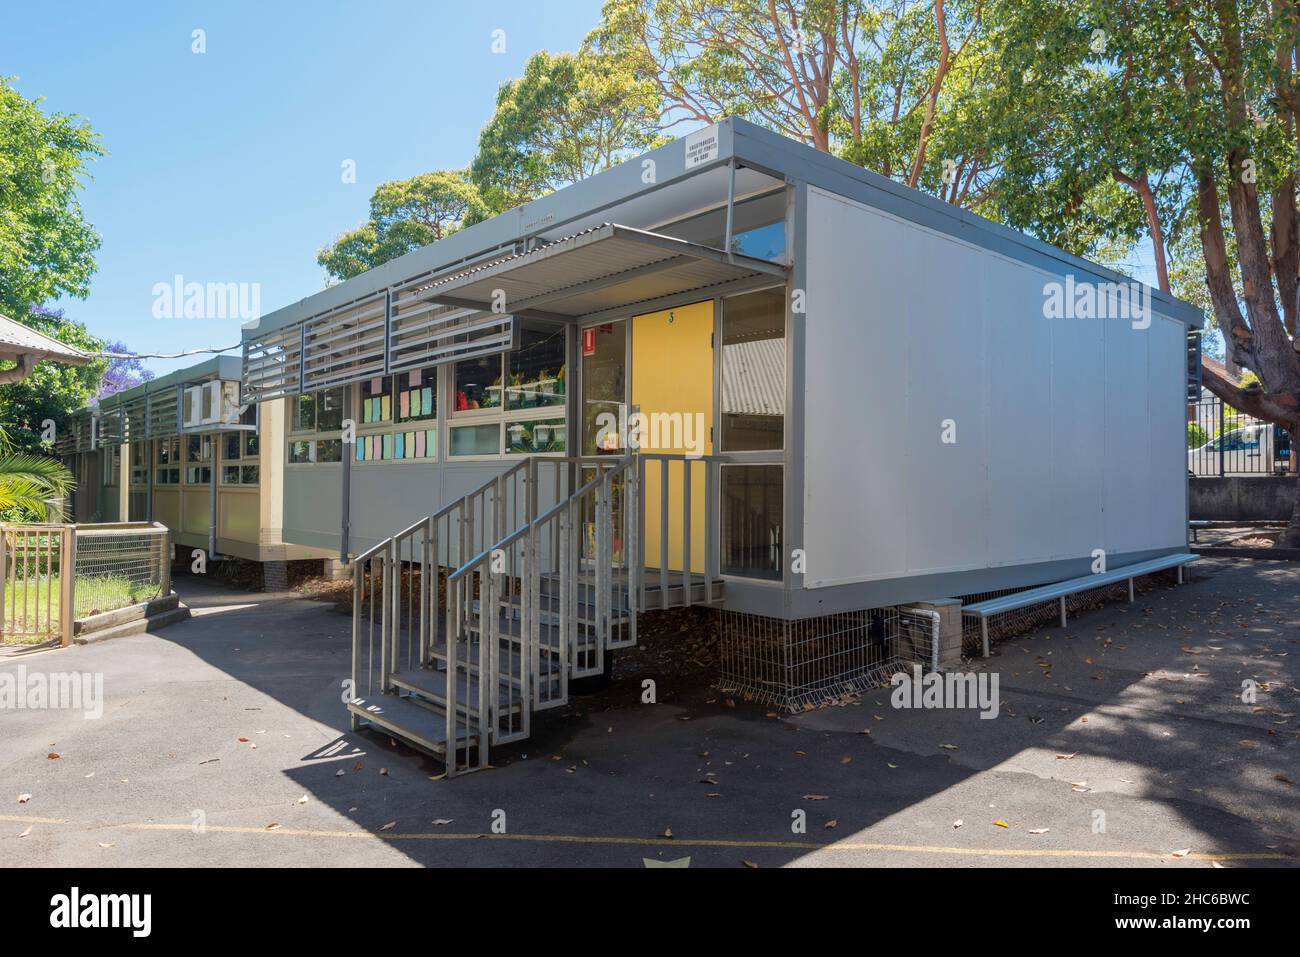 A demountable or portable classroom in use at Naremburn Public School in western Sydney, New South Wales, Australia. Edward Farmer, NSW Govt Architect Stock Photo